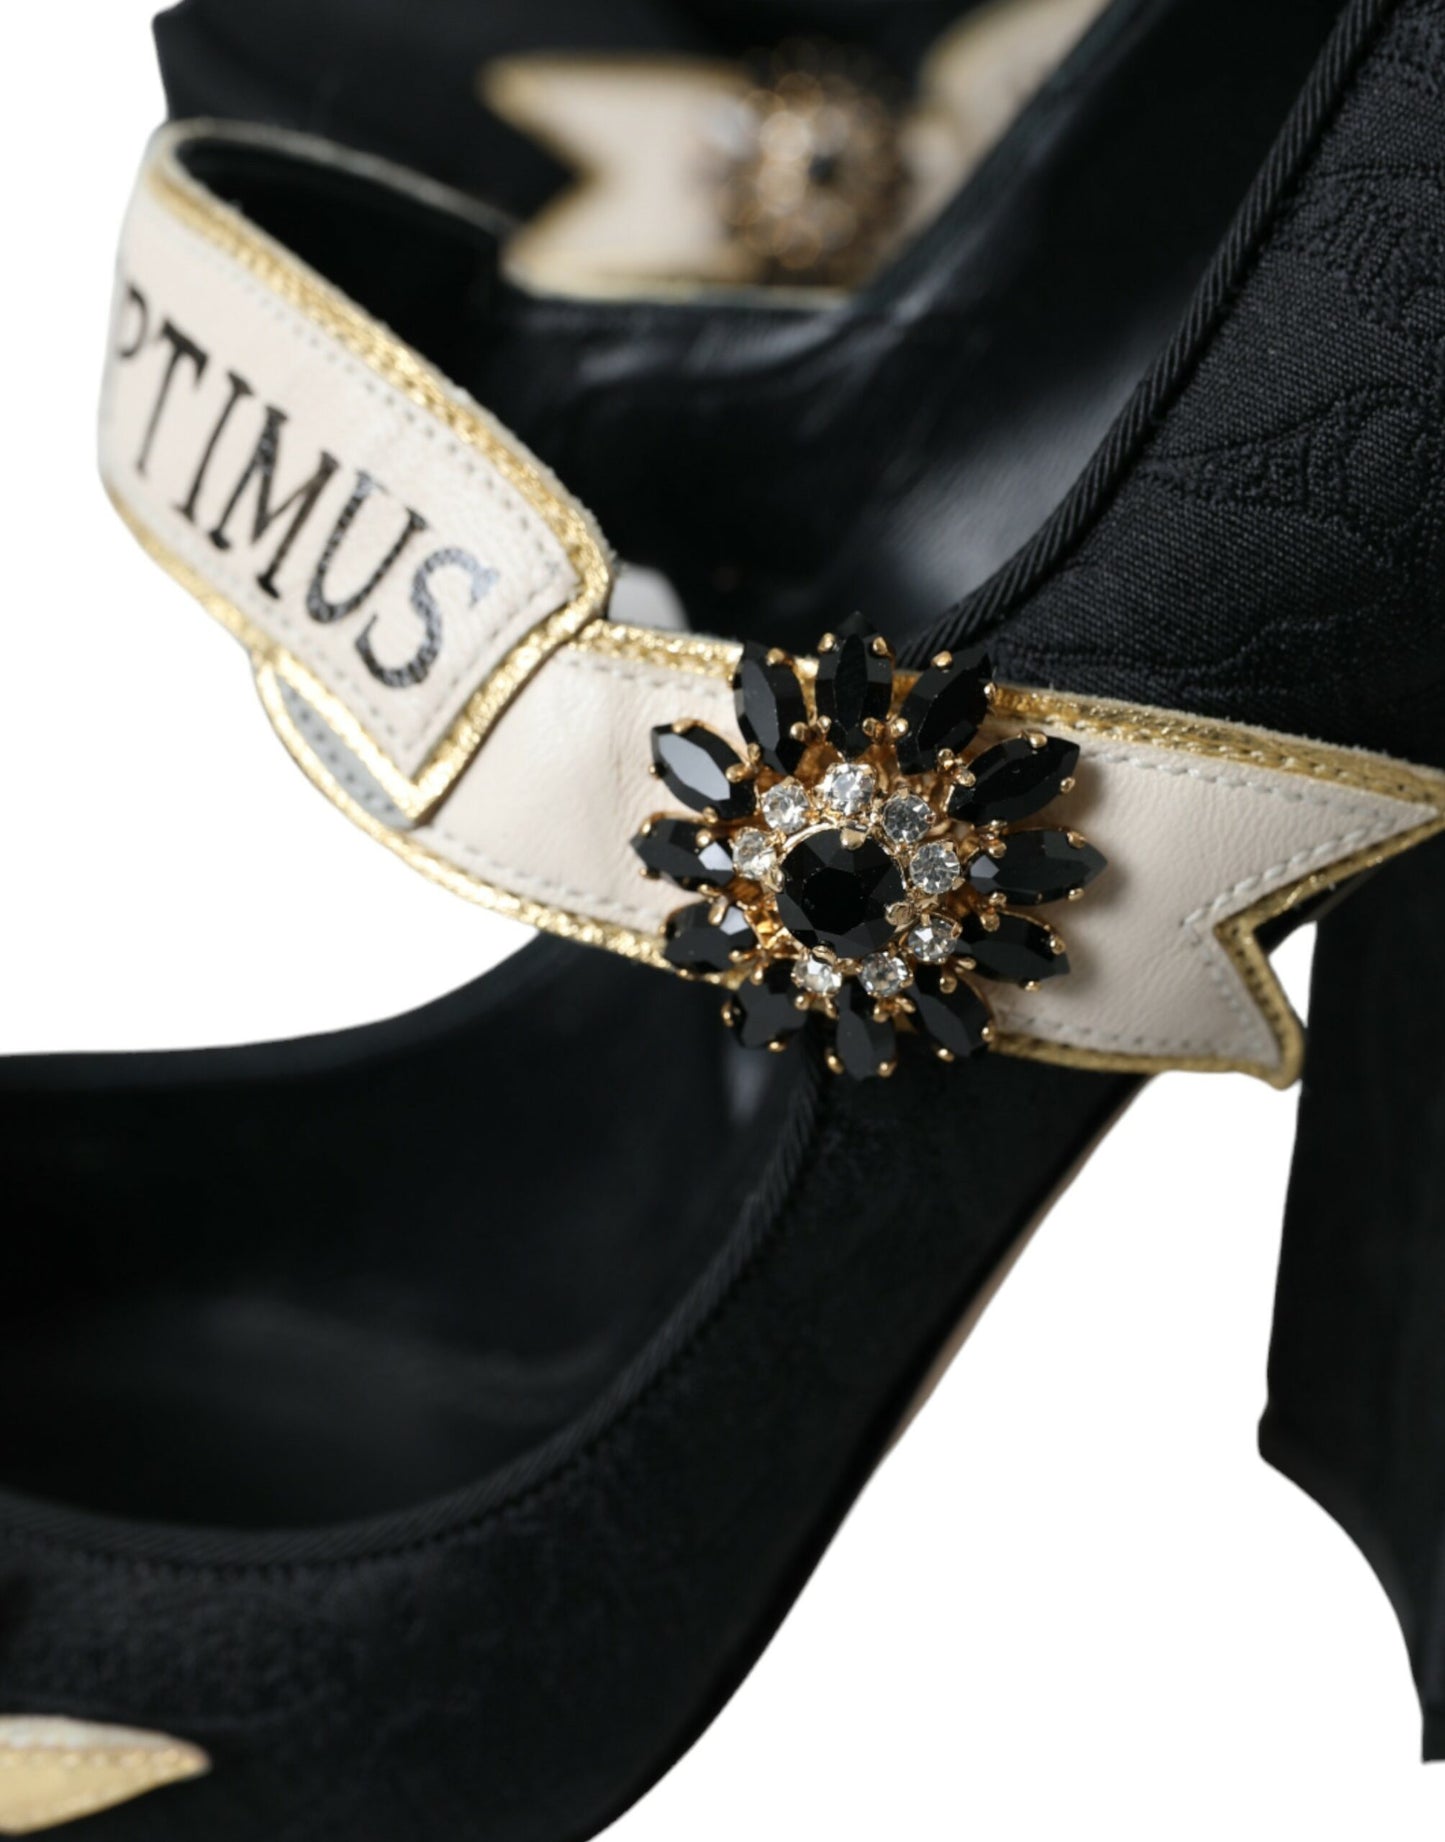 Black Brocade Mary Janes Crystal Pumps Shoes